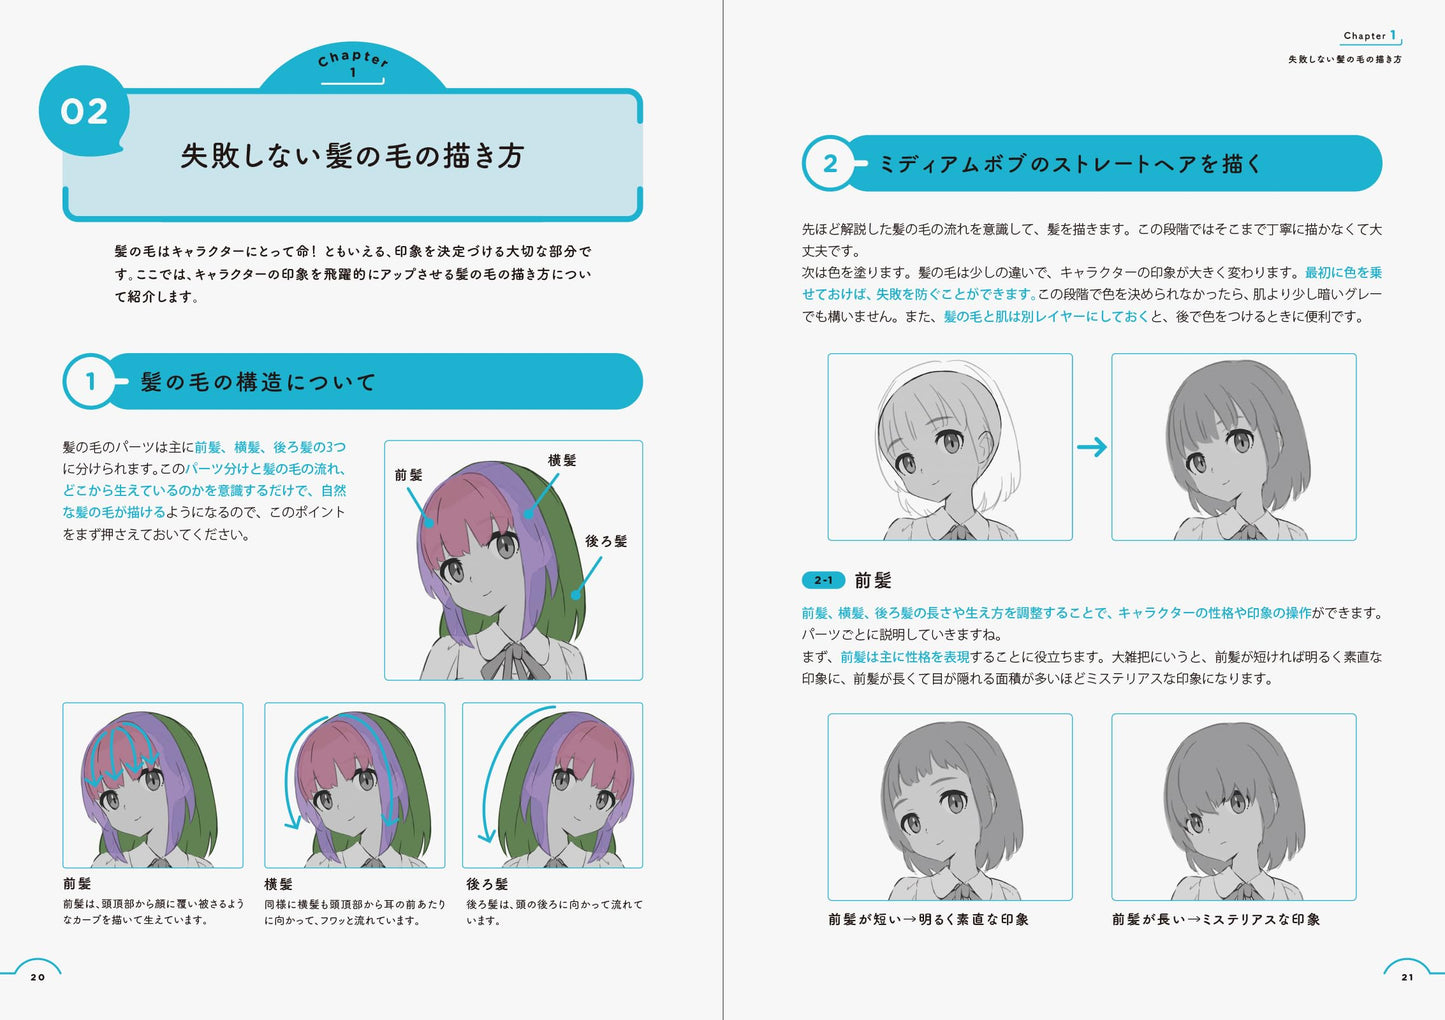 Character Illustration Thorough Explanation by Naoki Saito